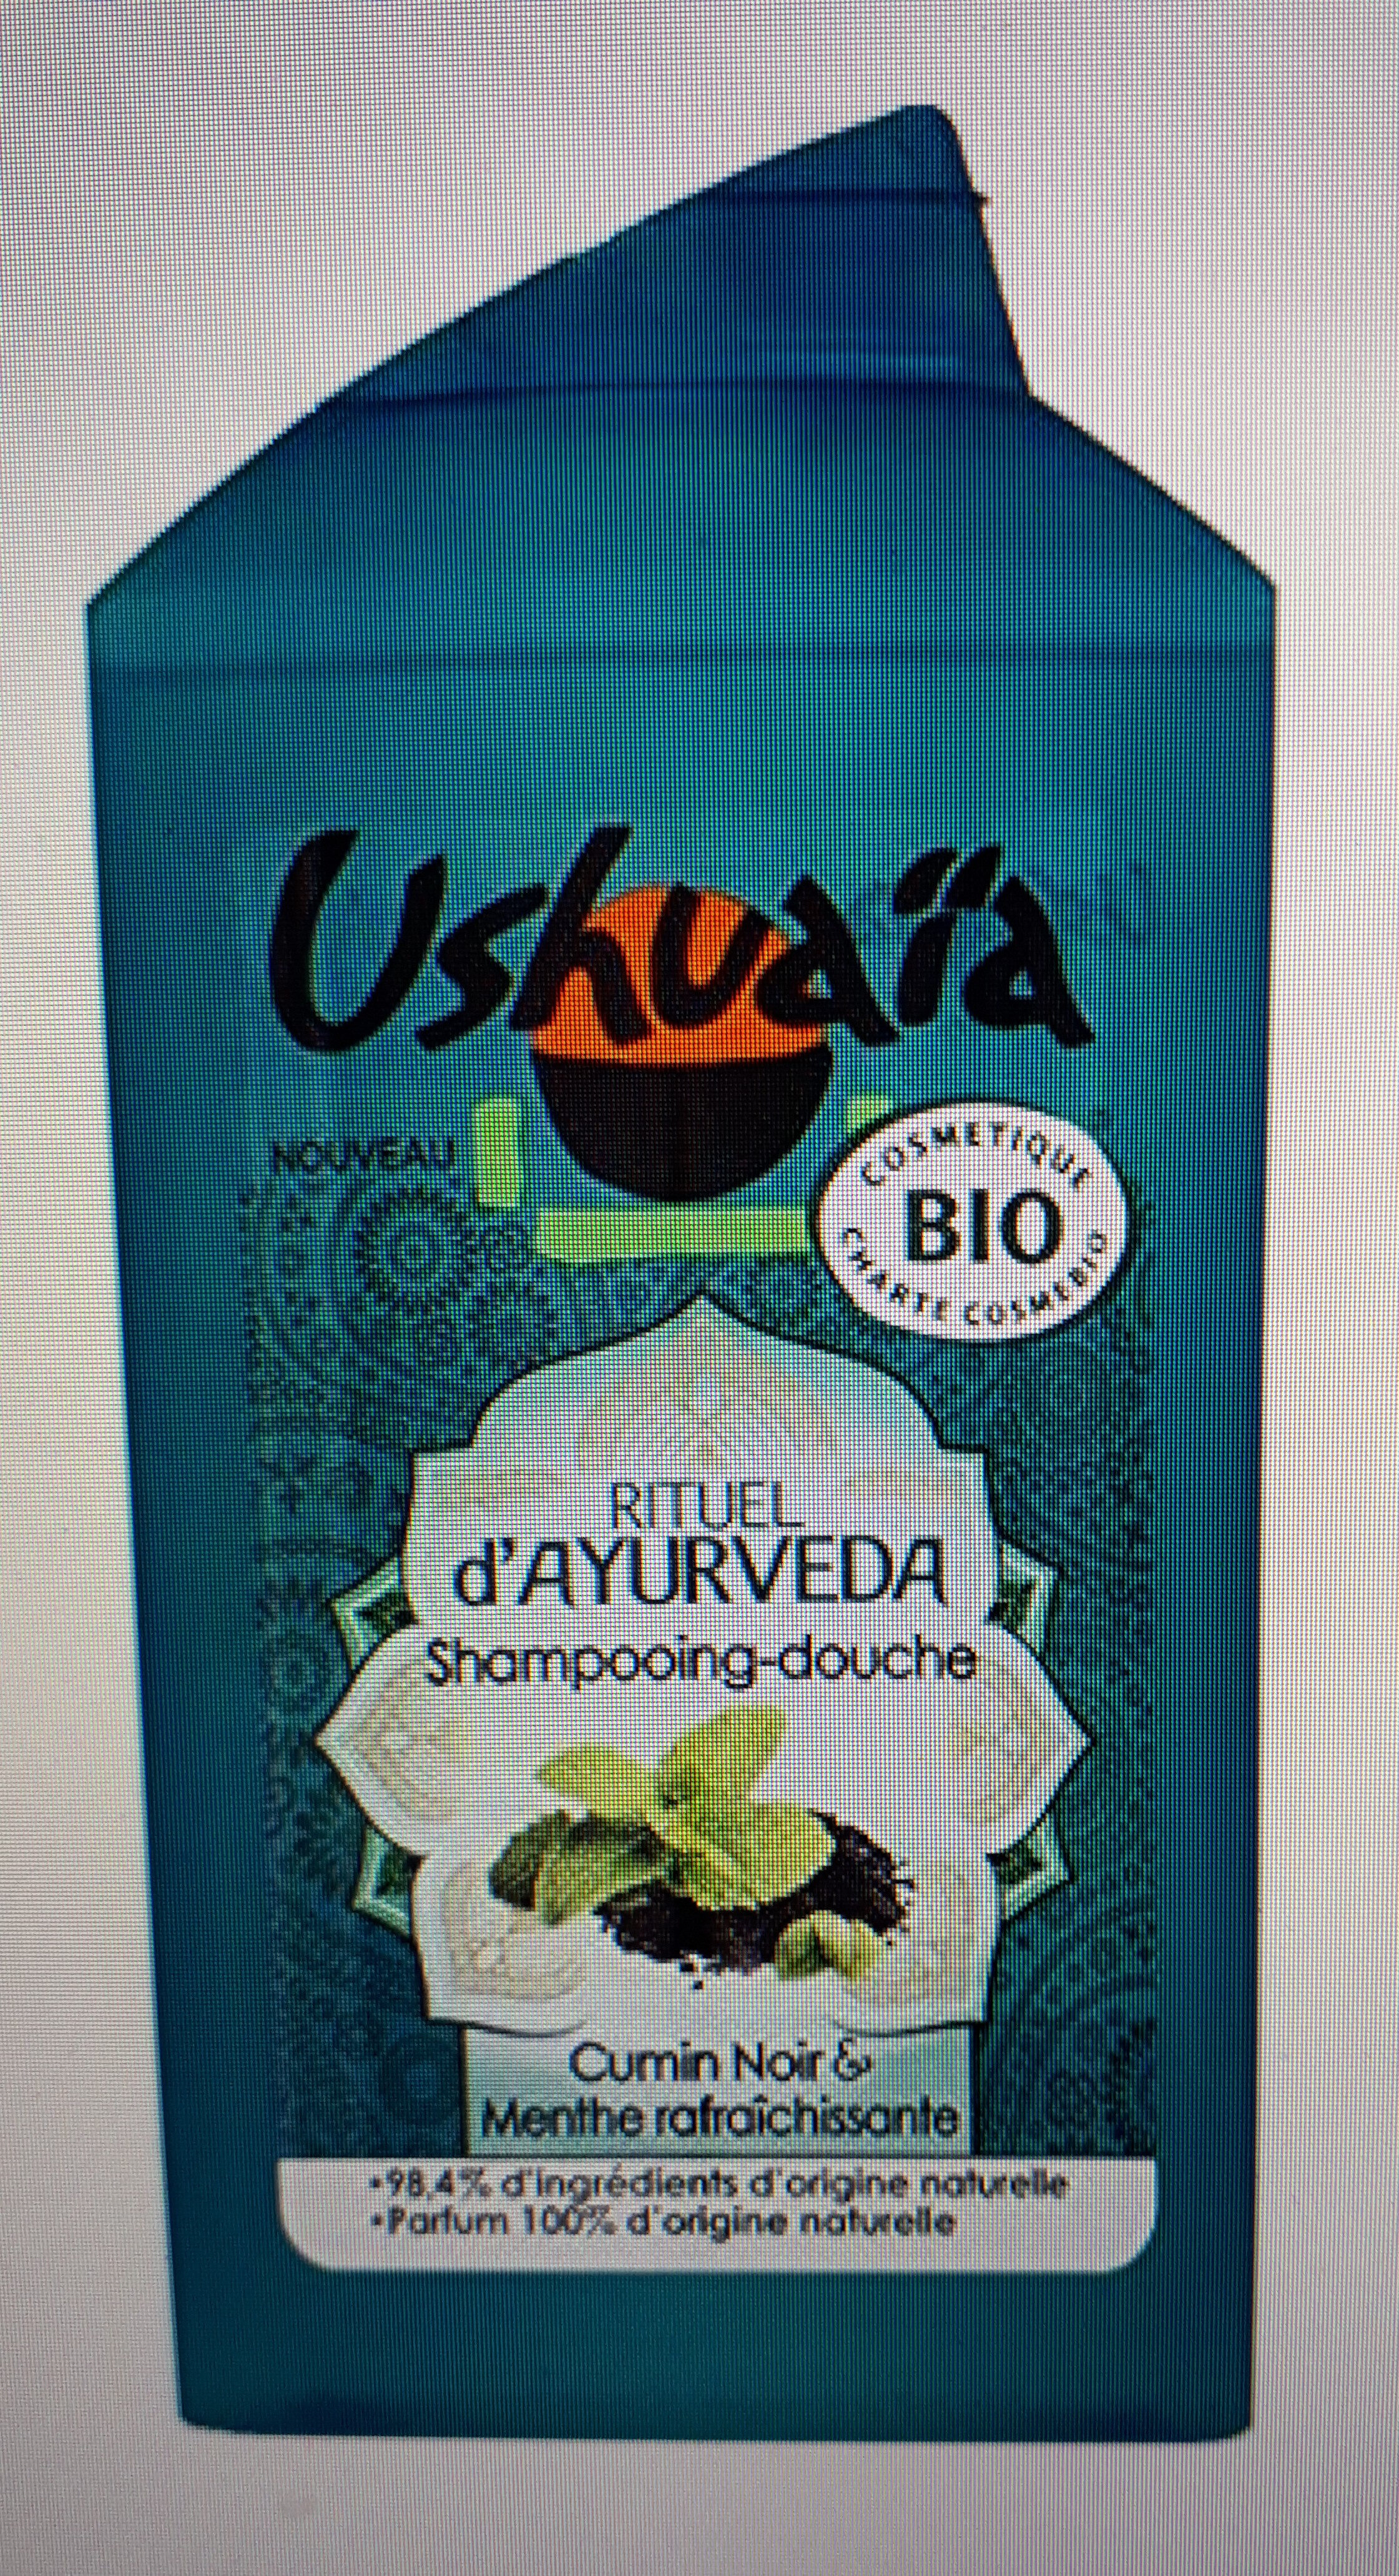 Rituel d'Ayurveda shampooing-douche - מוצר - fr